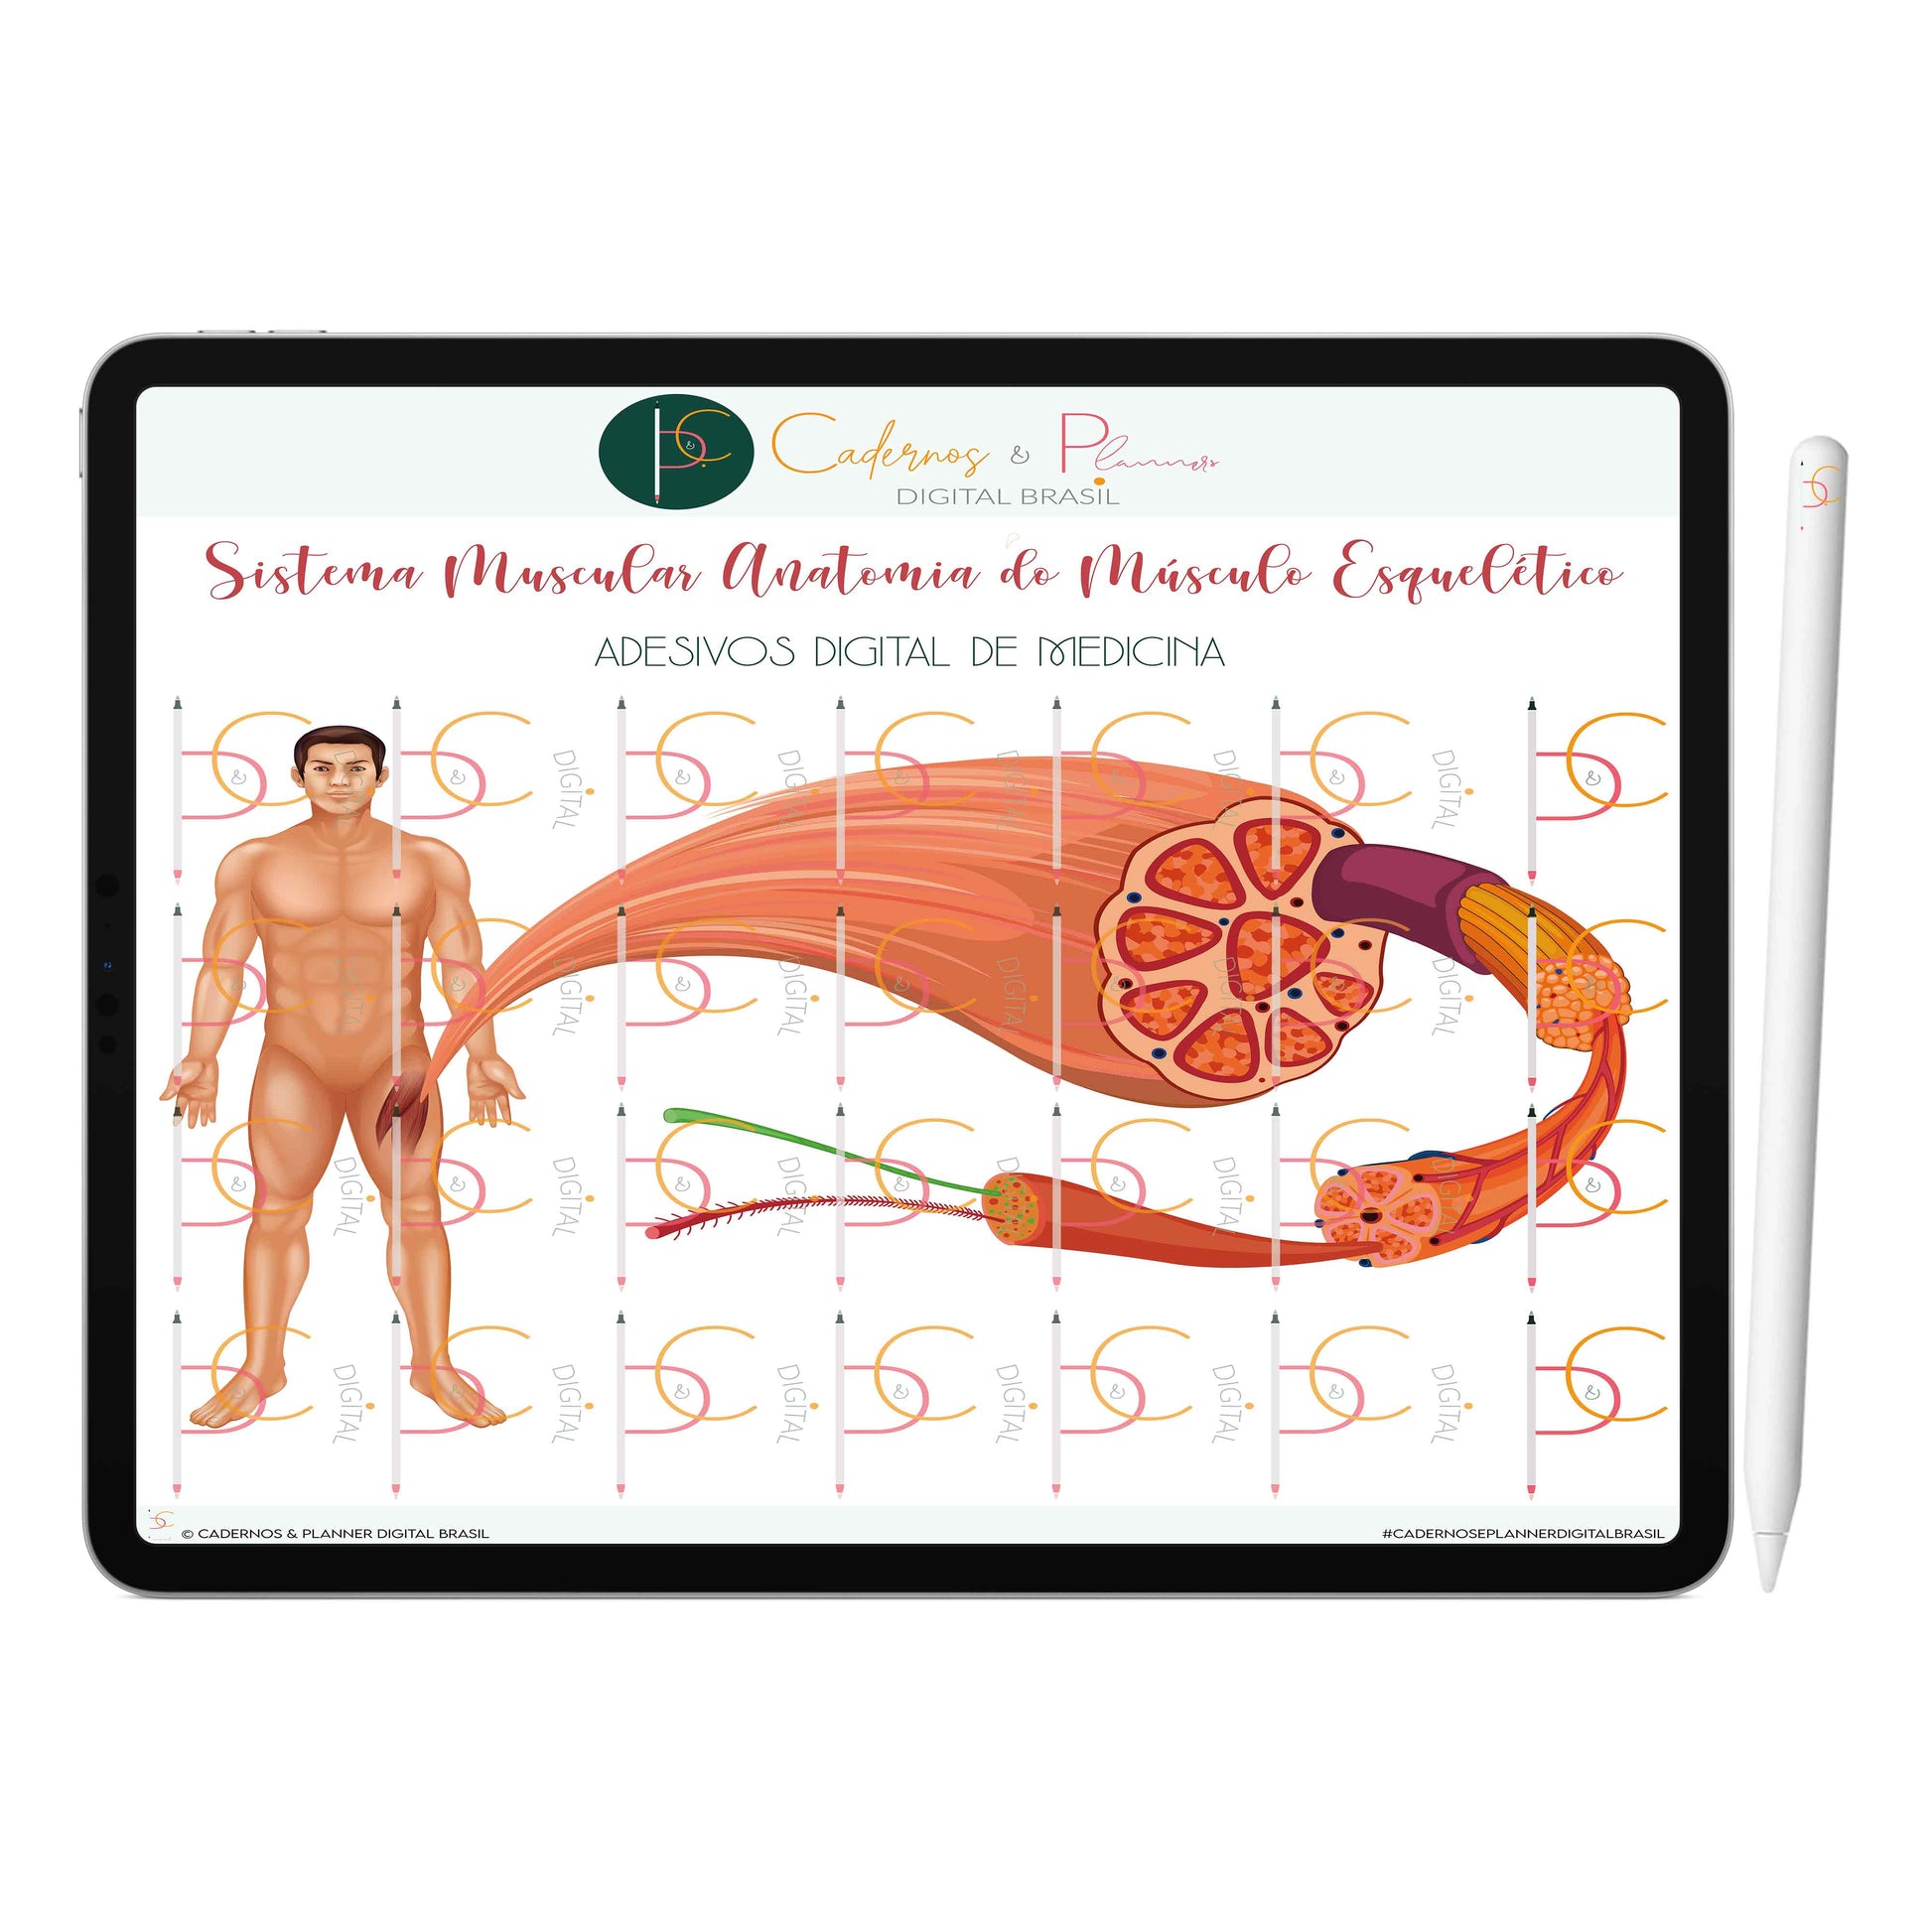 Adesivos Digital de Medicina - Sistema Muscular Anatomia do Músculo Humano Músculo Esquelético • iPad Tablet • GoodNotes Noteshelf